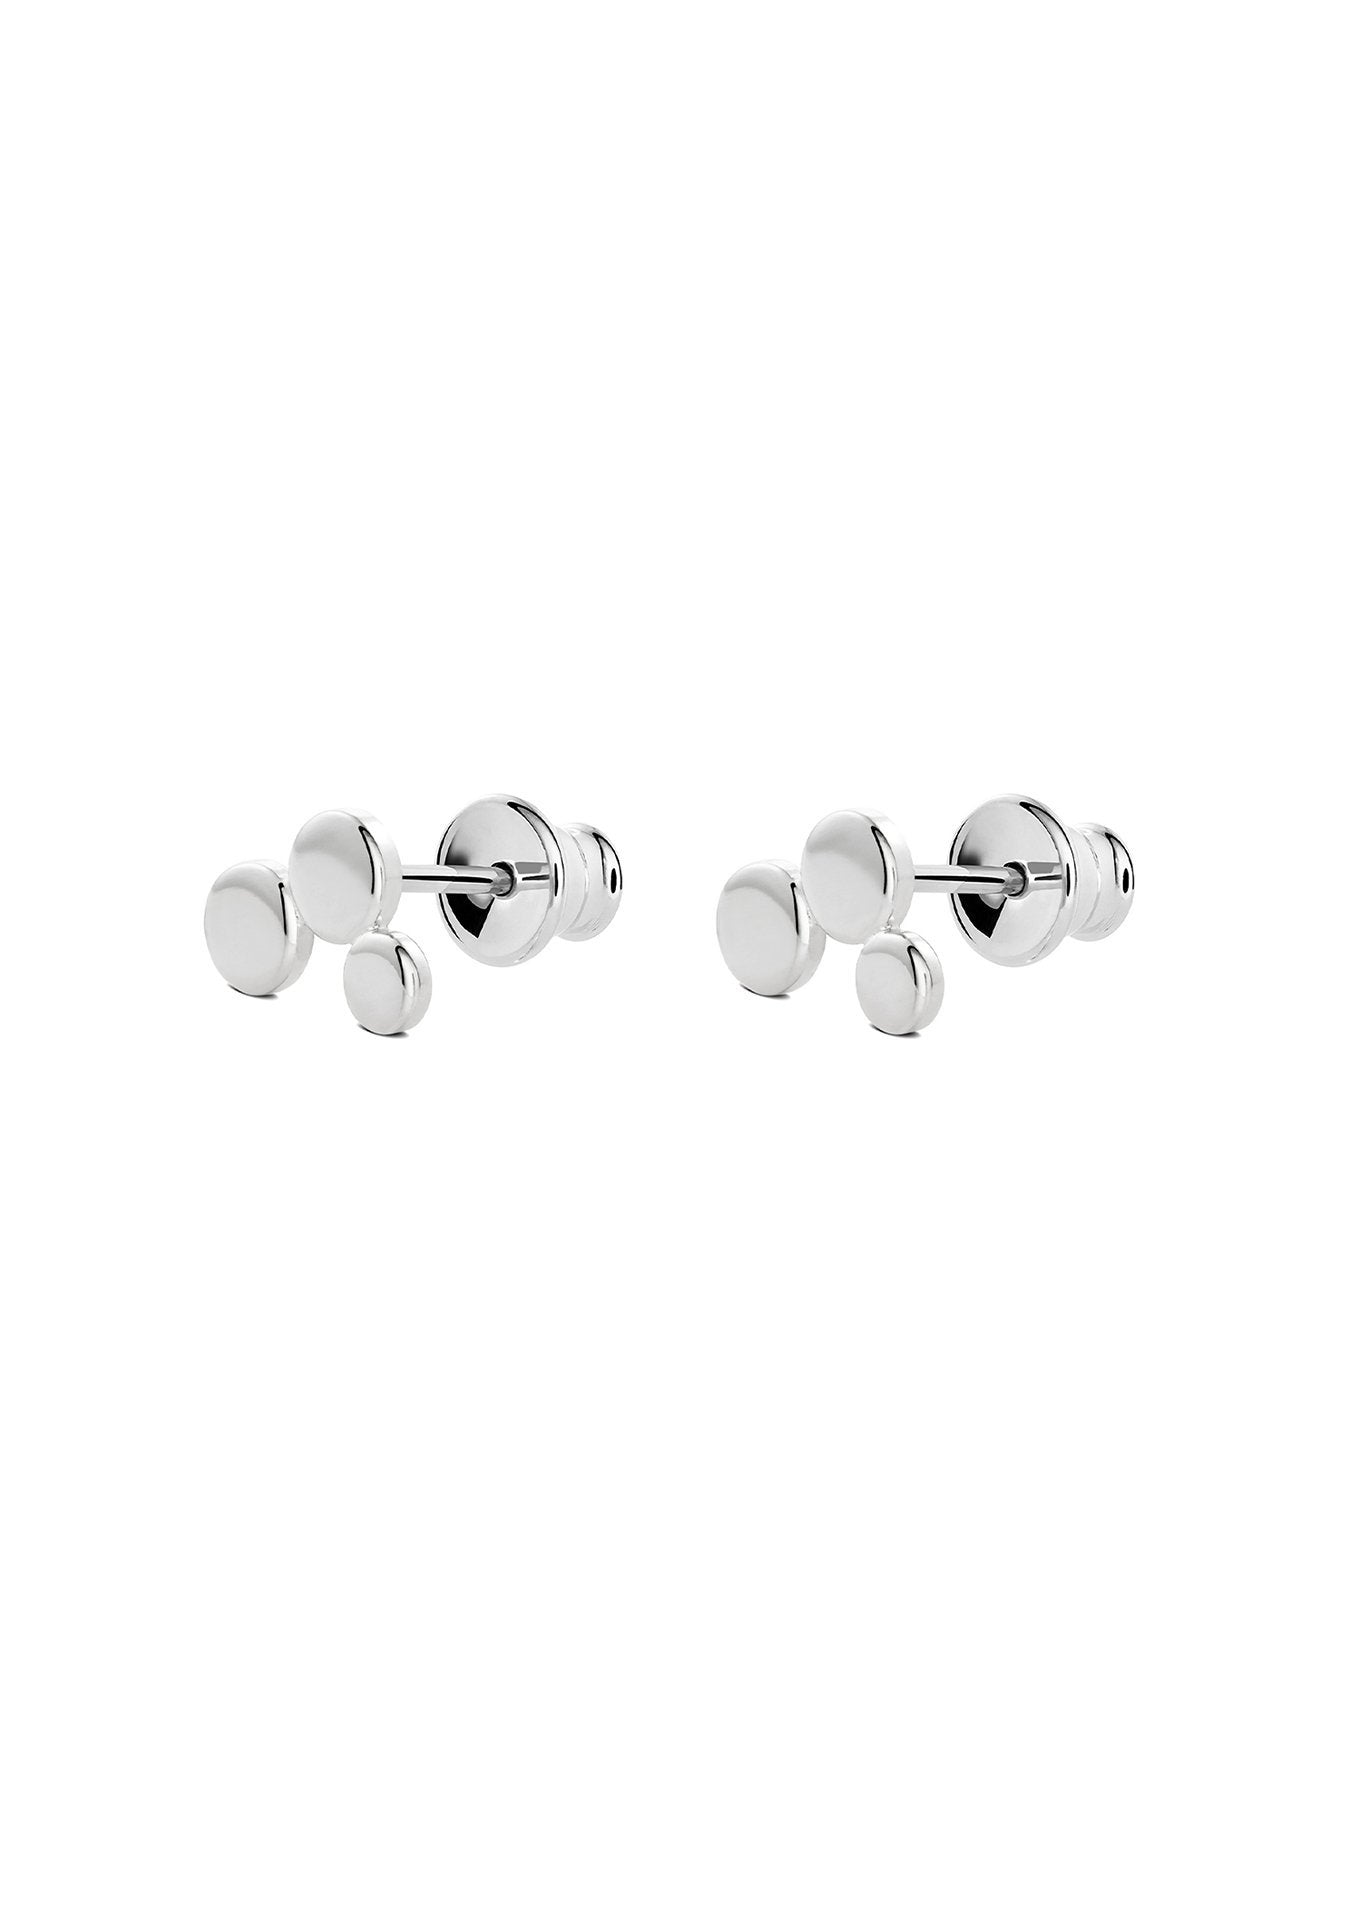 NO MORE accessories Triple Sec Earrings in sterling silver